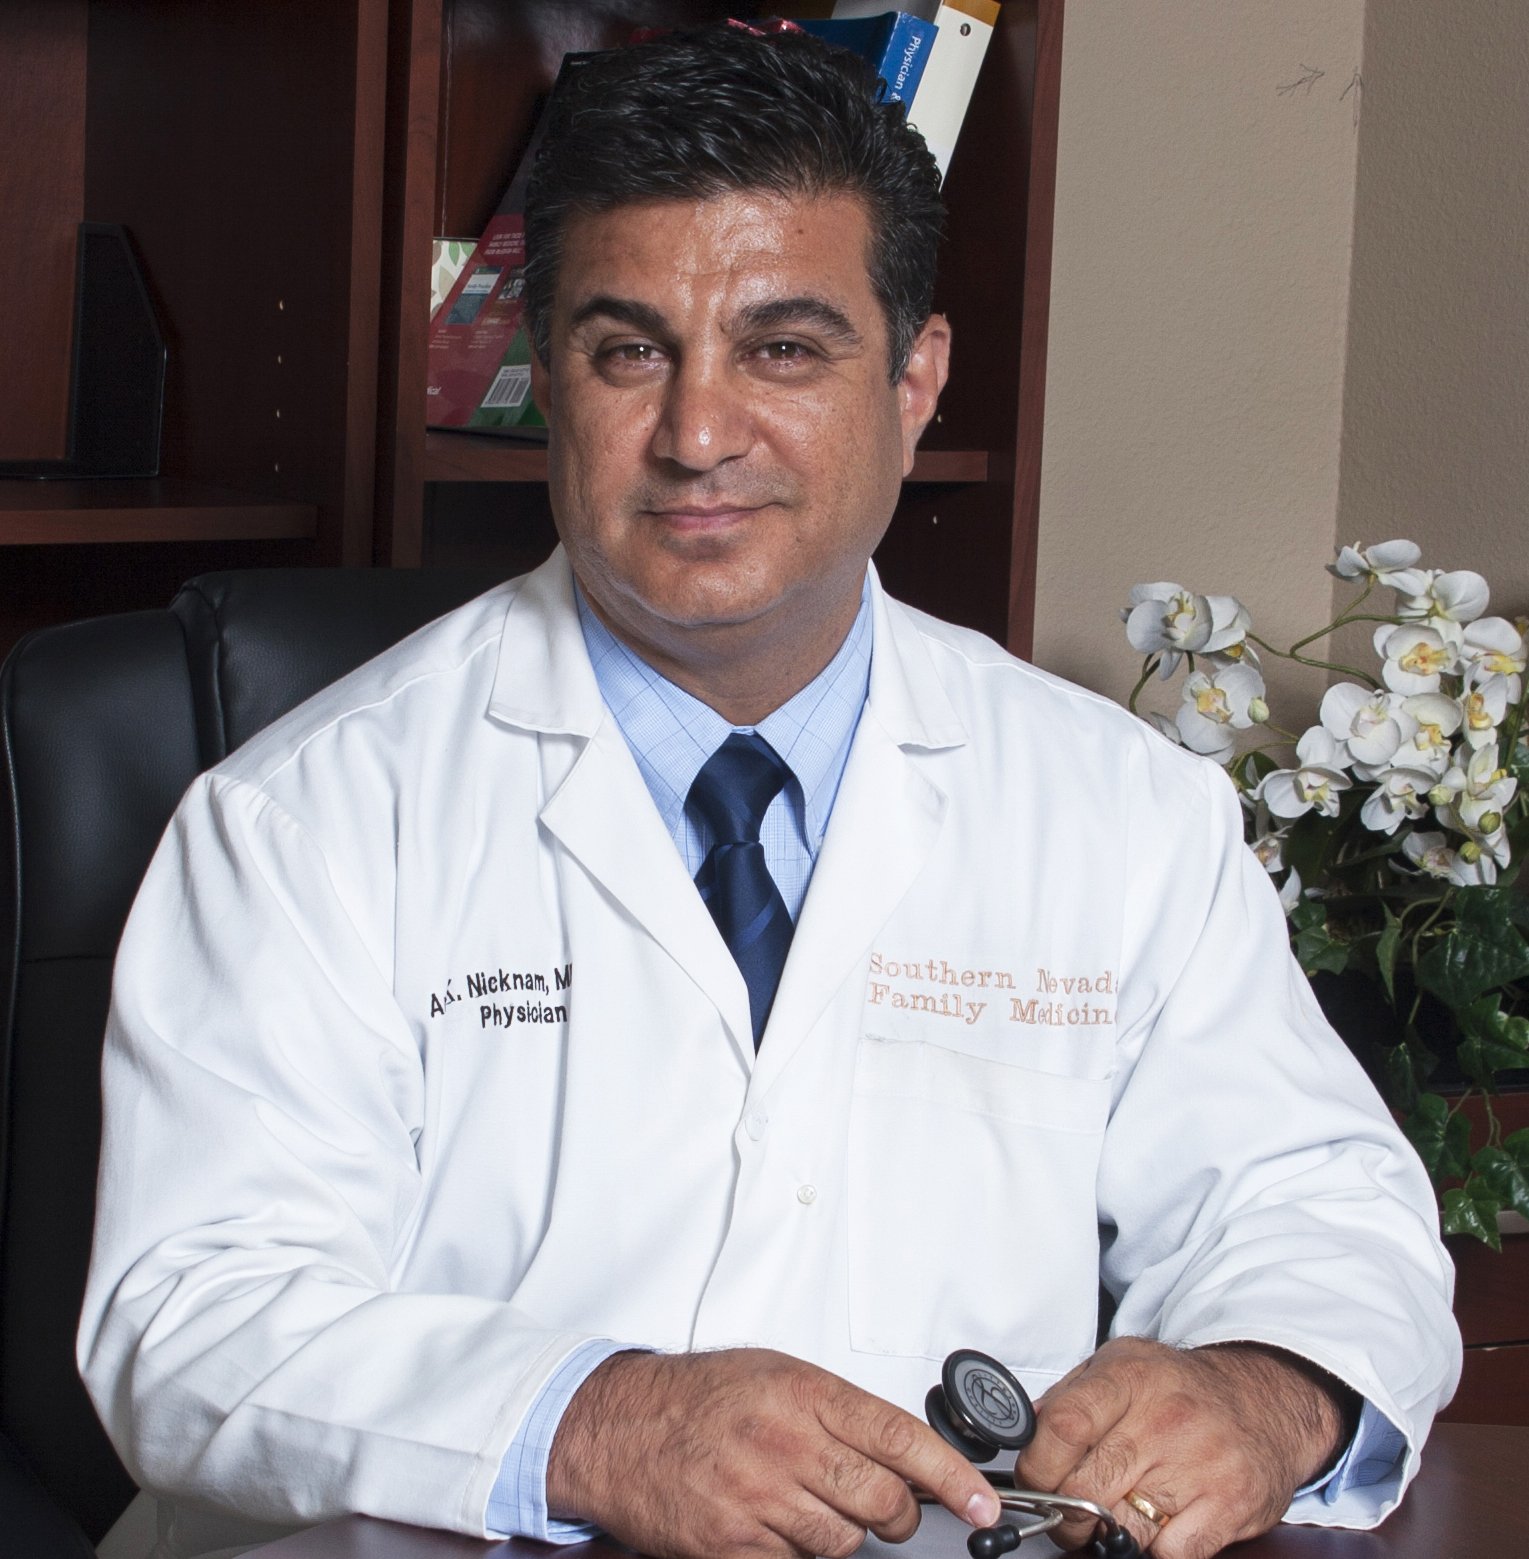 Dr. Amir Nicknam